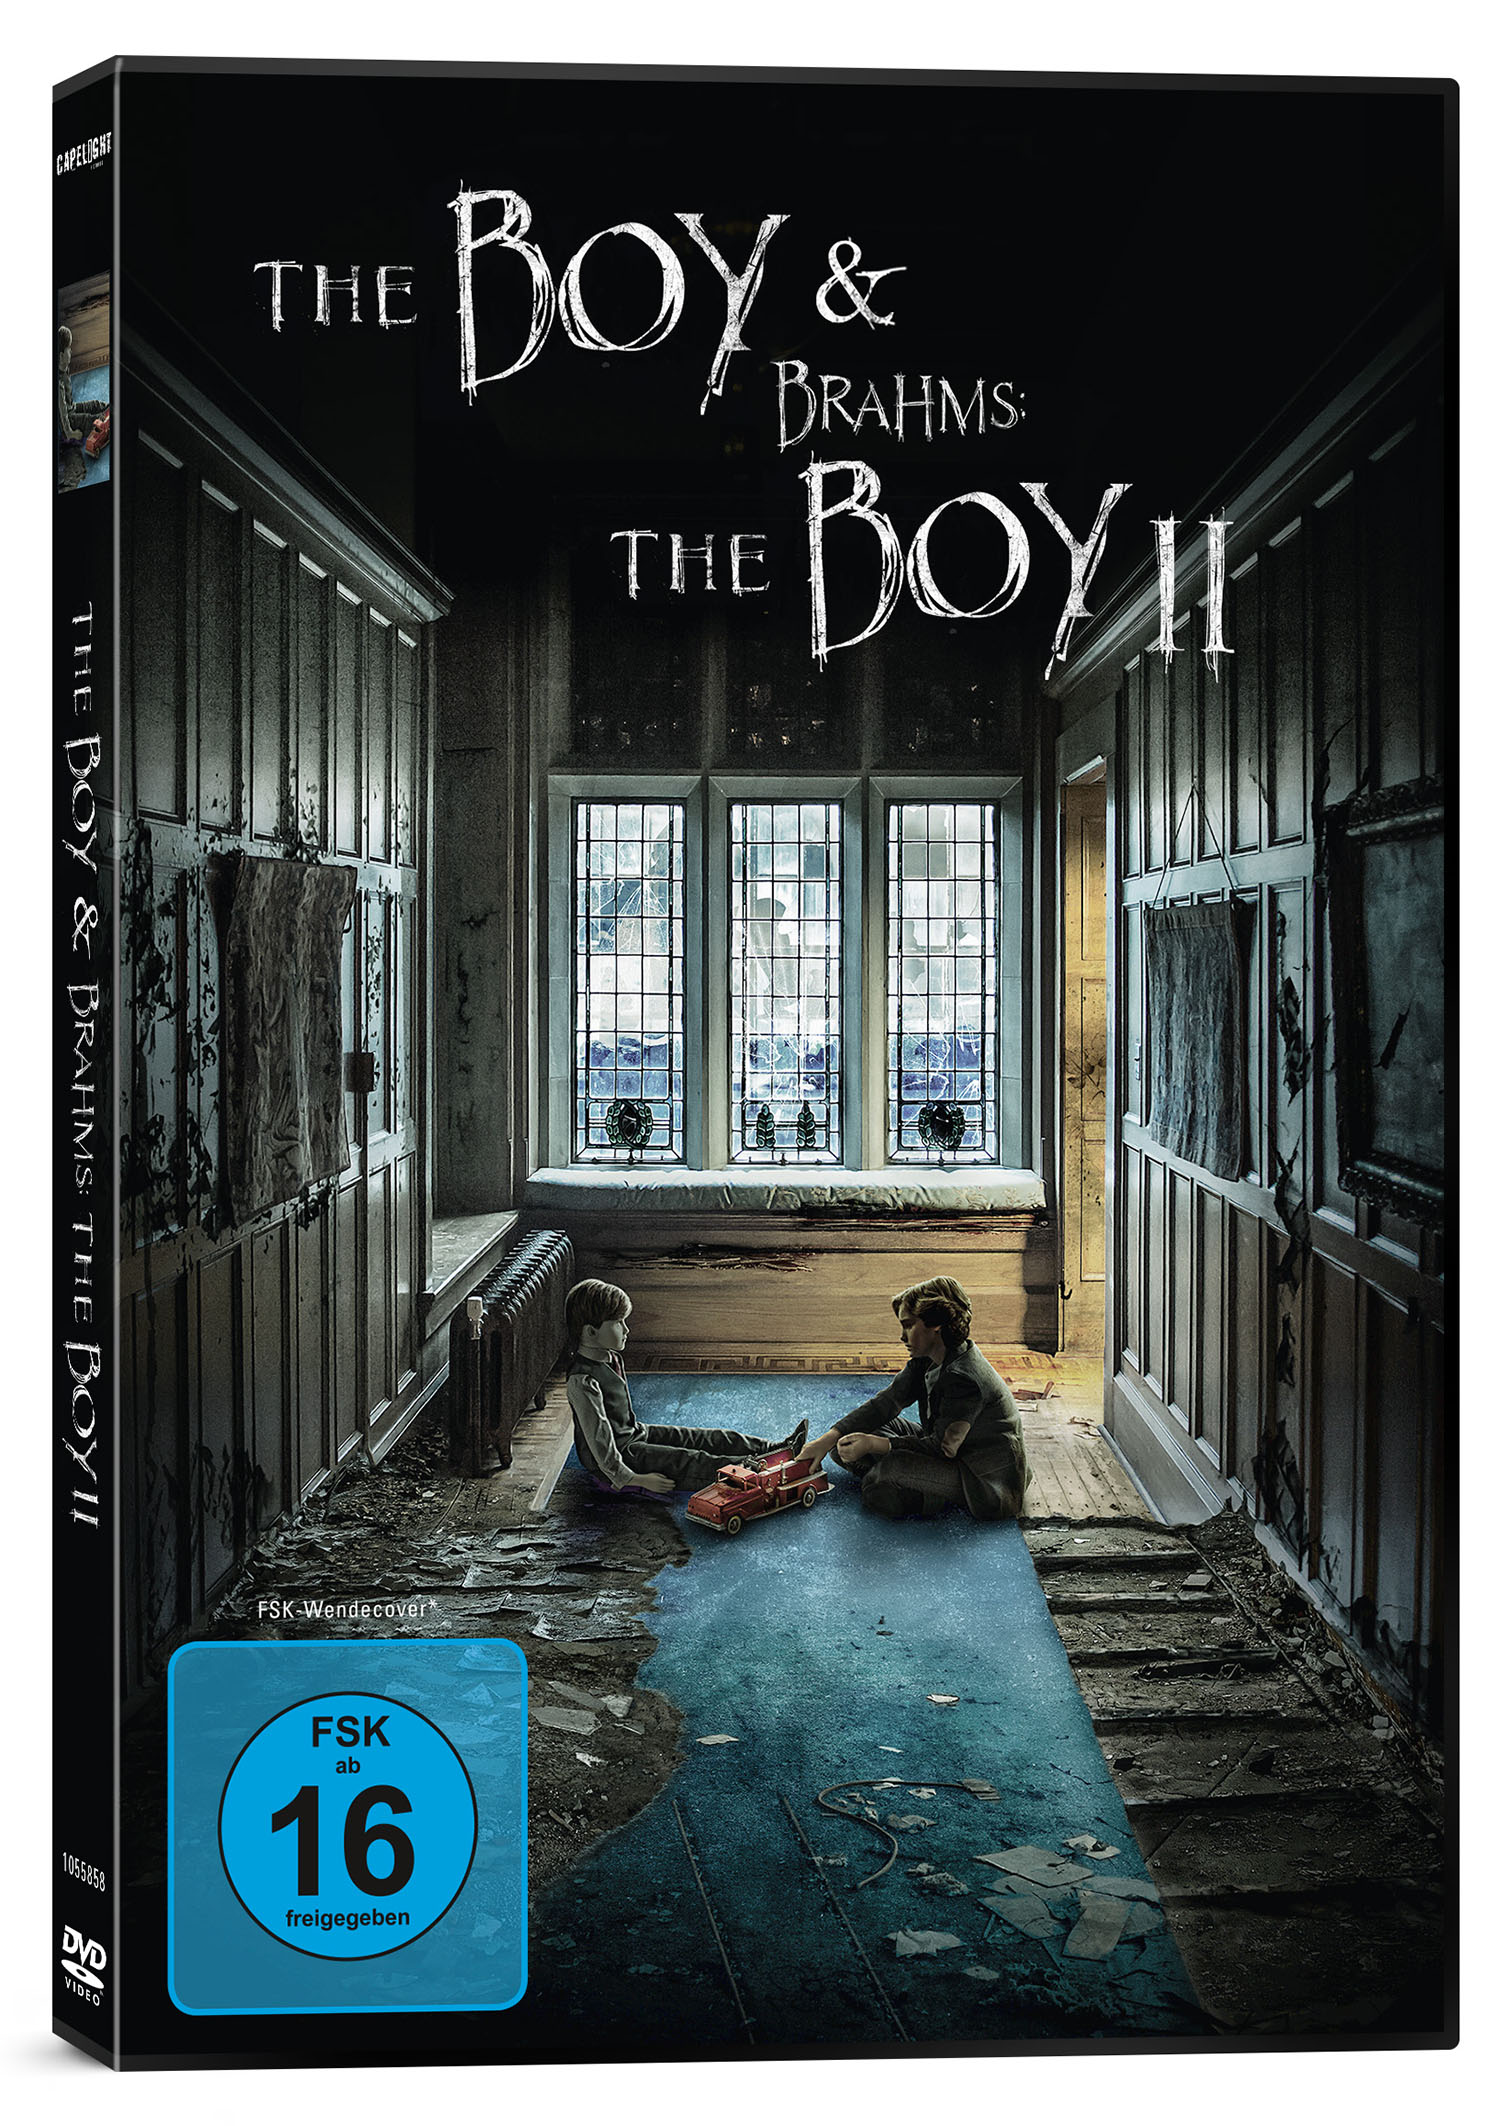 The Boy I + II (DVD) Image 2